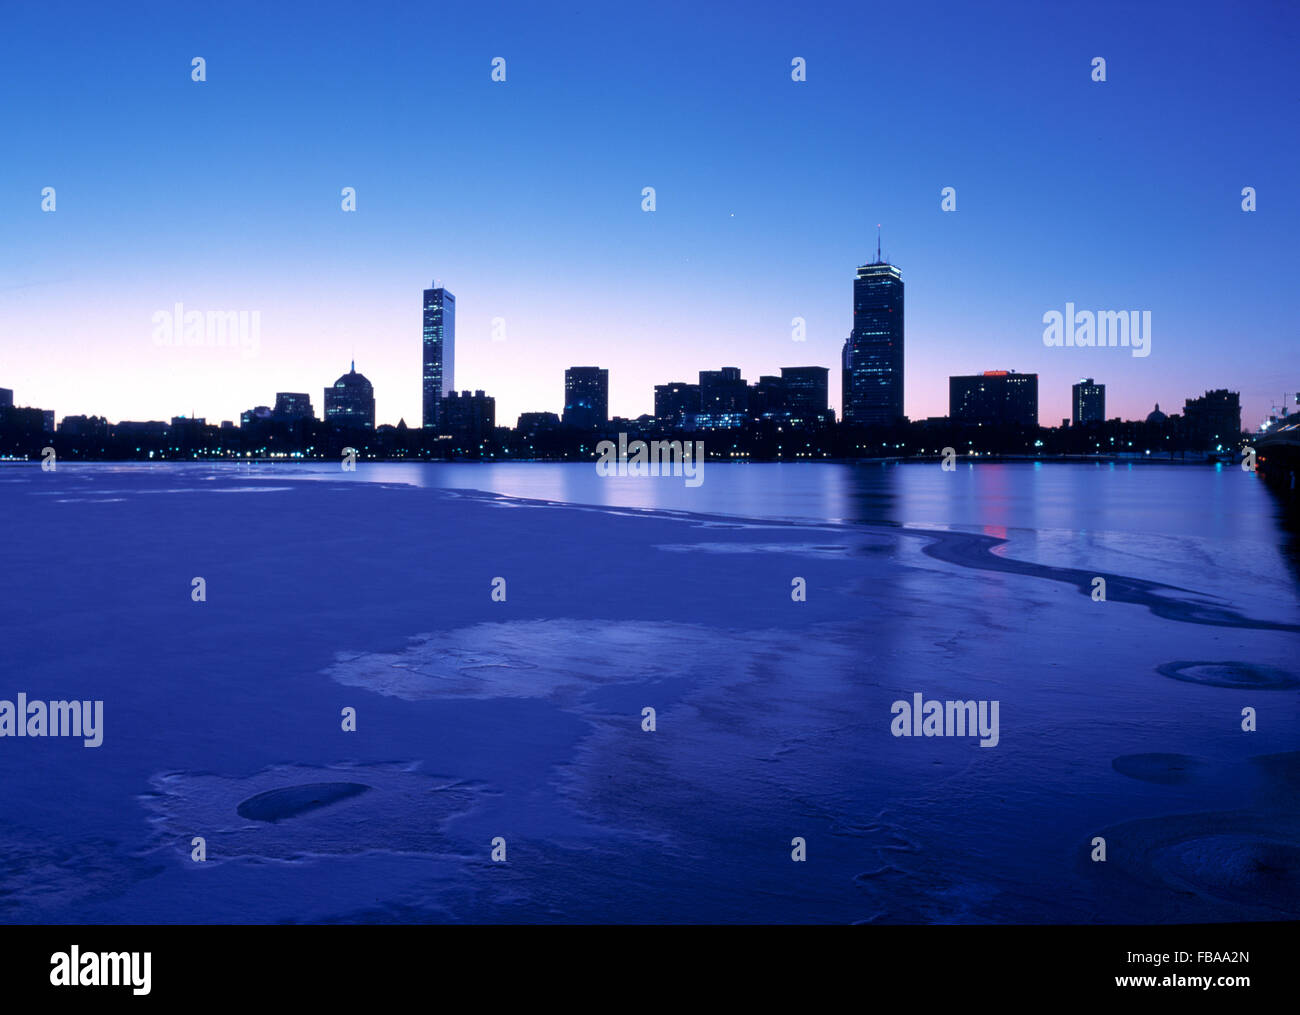 Boston's Back Bay and Charles River seen at dawn Stock Photo